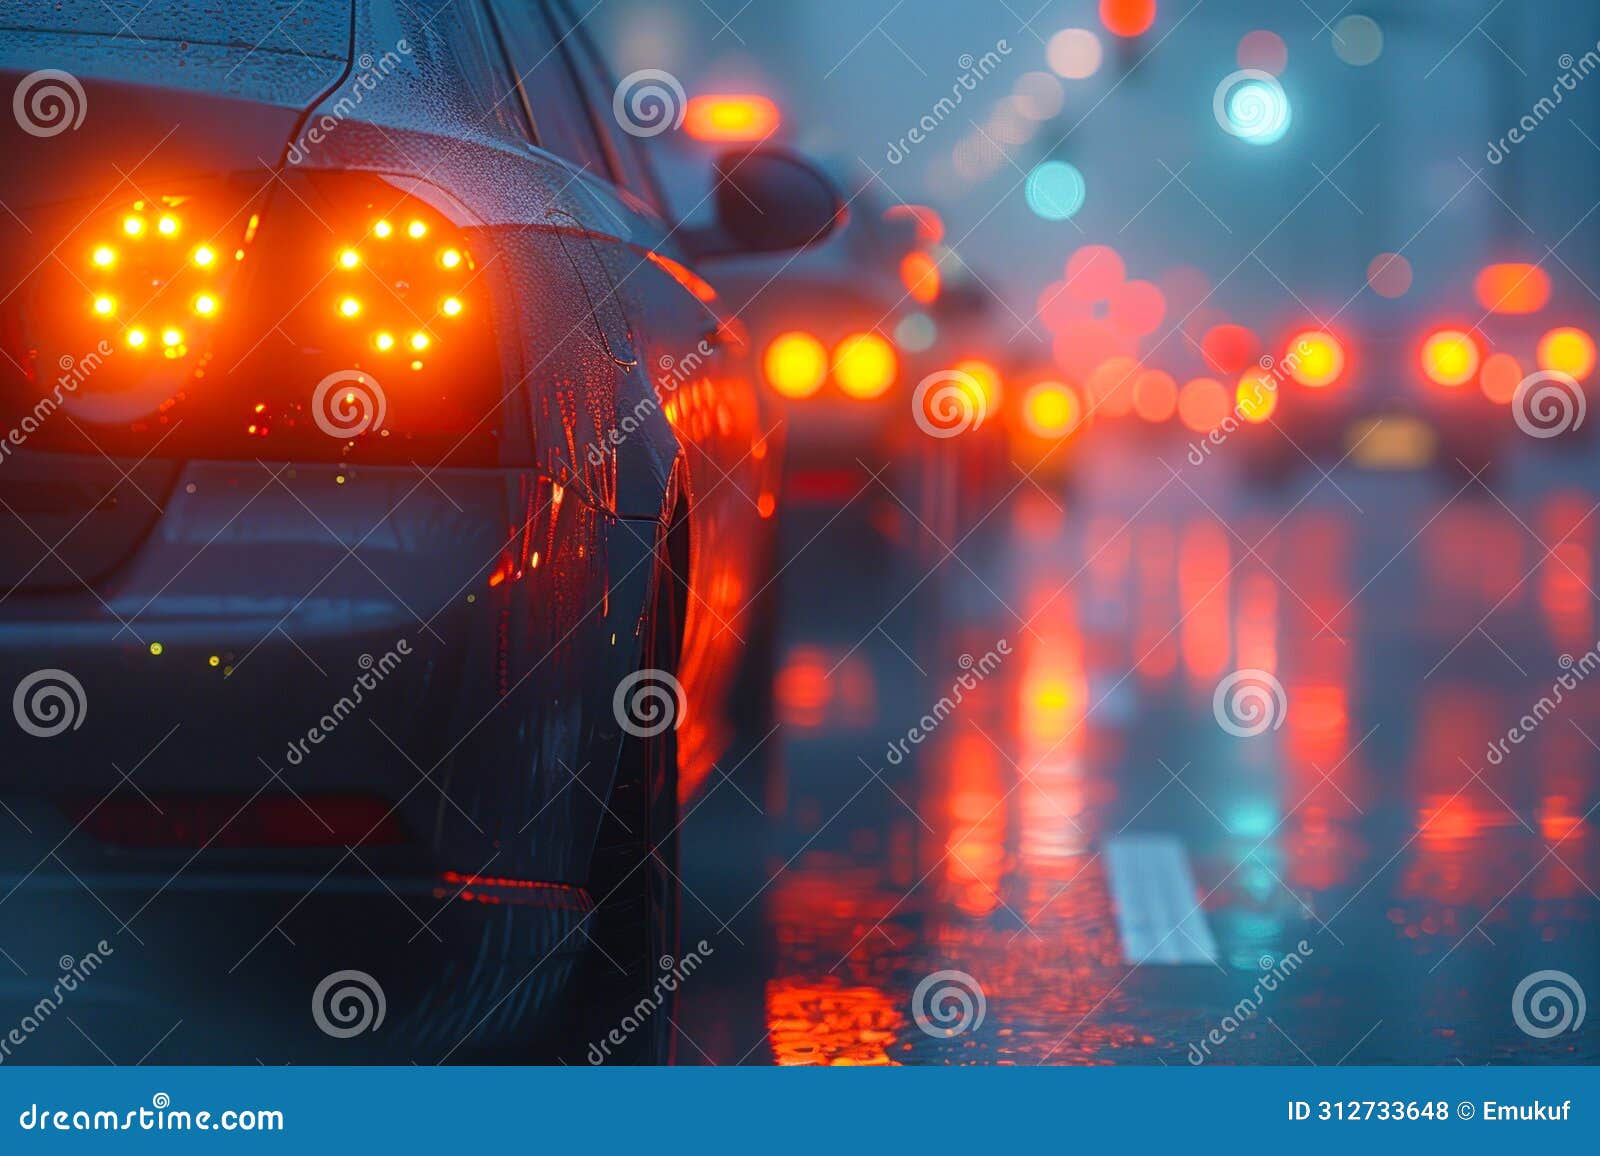 vibrant taillights in nighttime traffic jam.